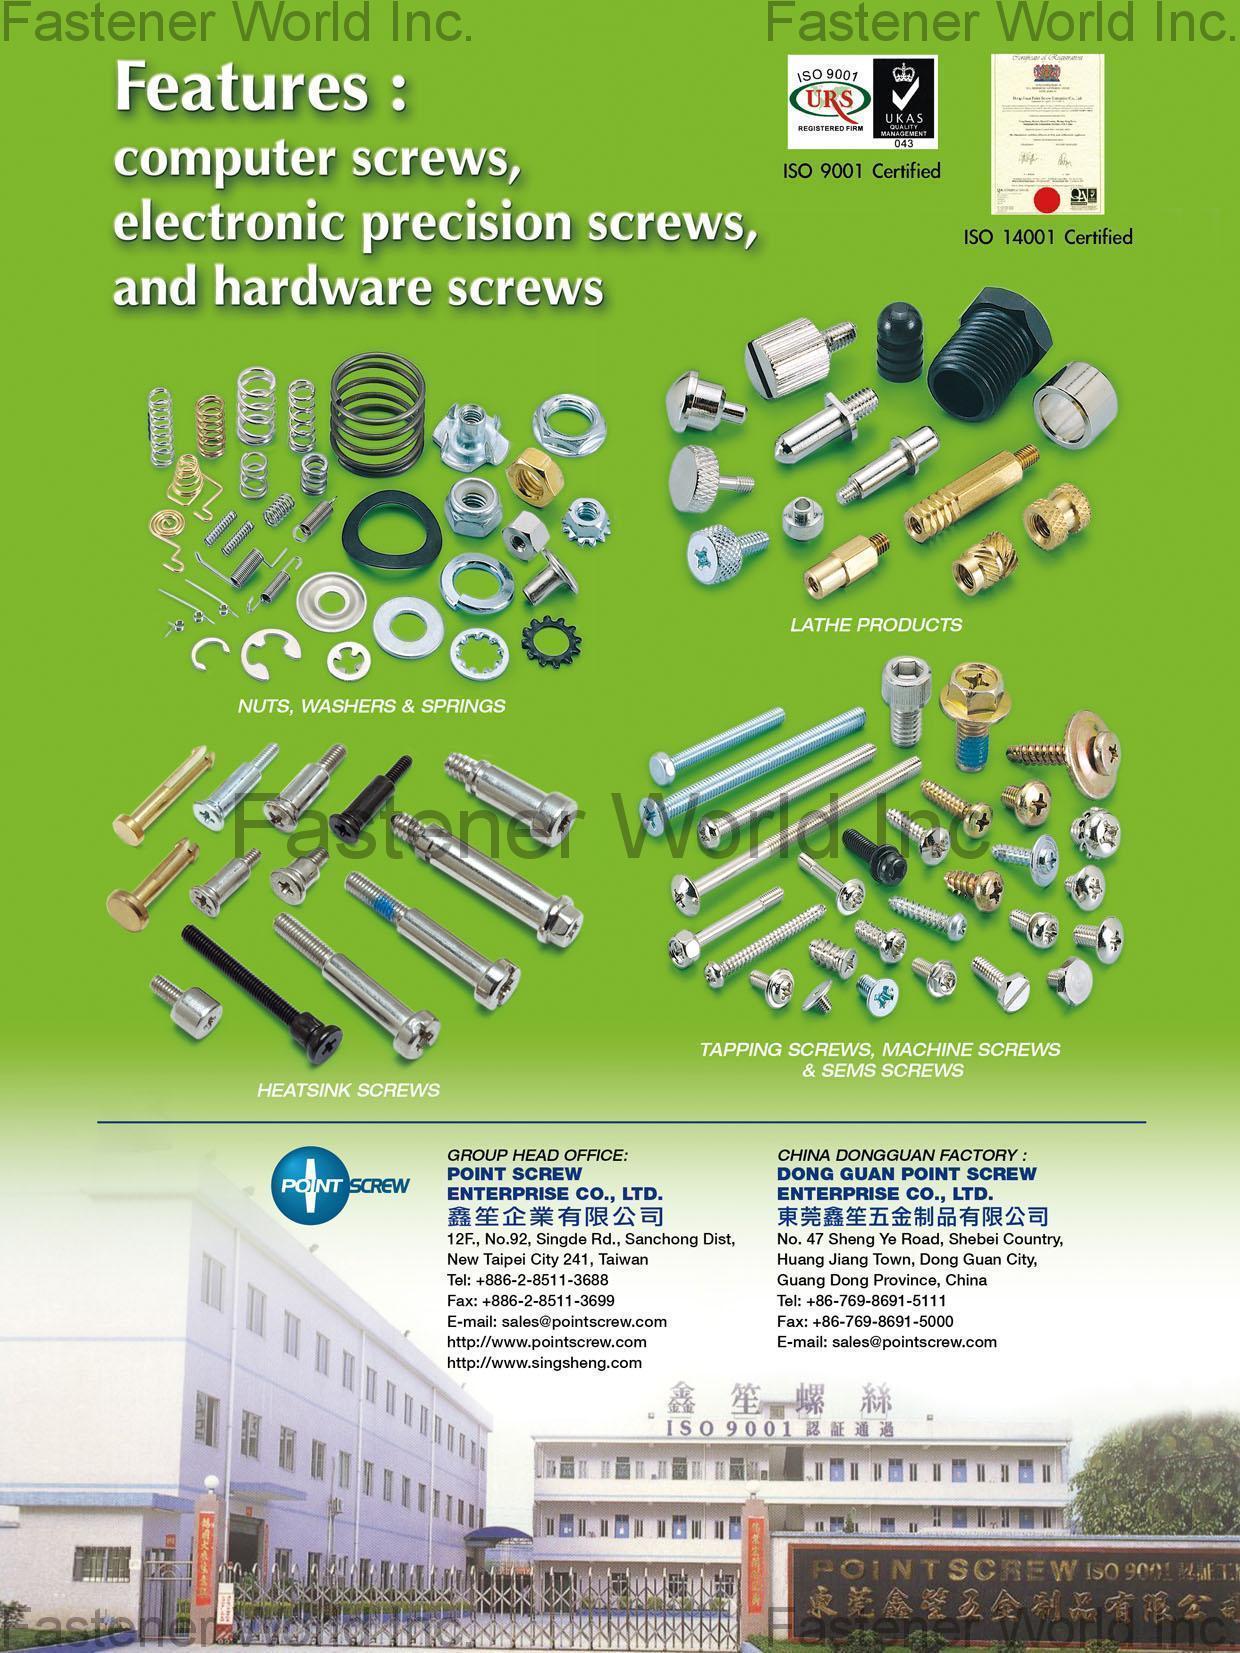 CNC parts, CNC lathe,Precision Electronic Screws,Hardwares,Tapping Screws,Machine Screws,SEMS Screws